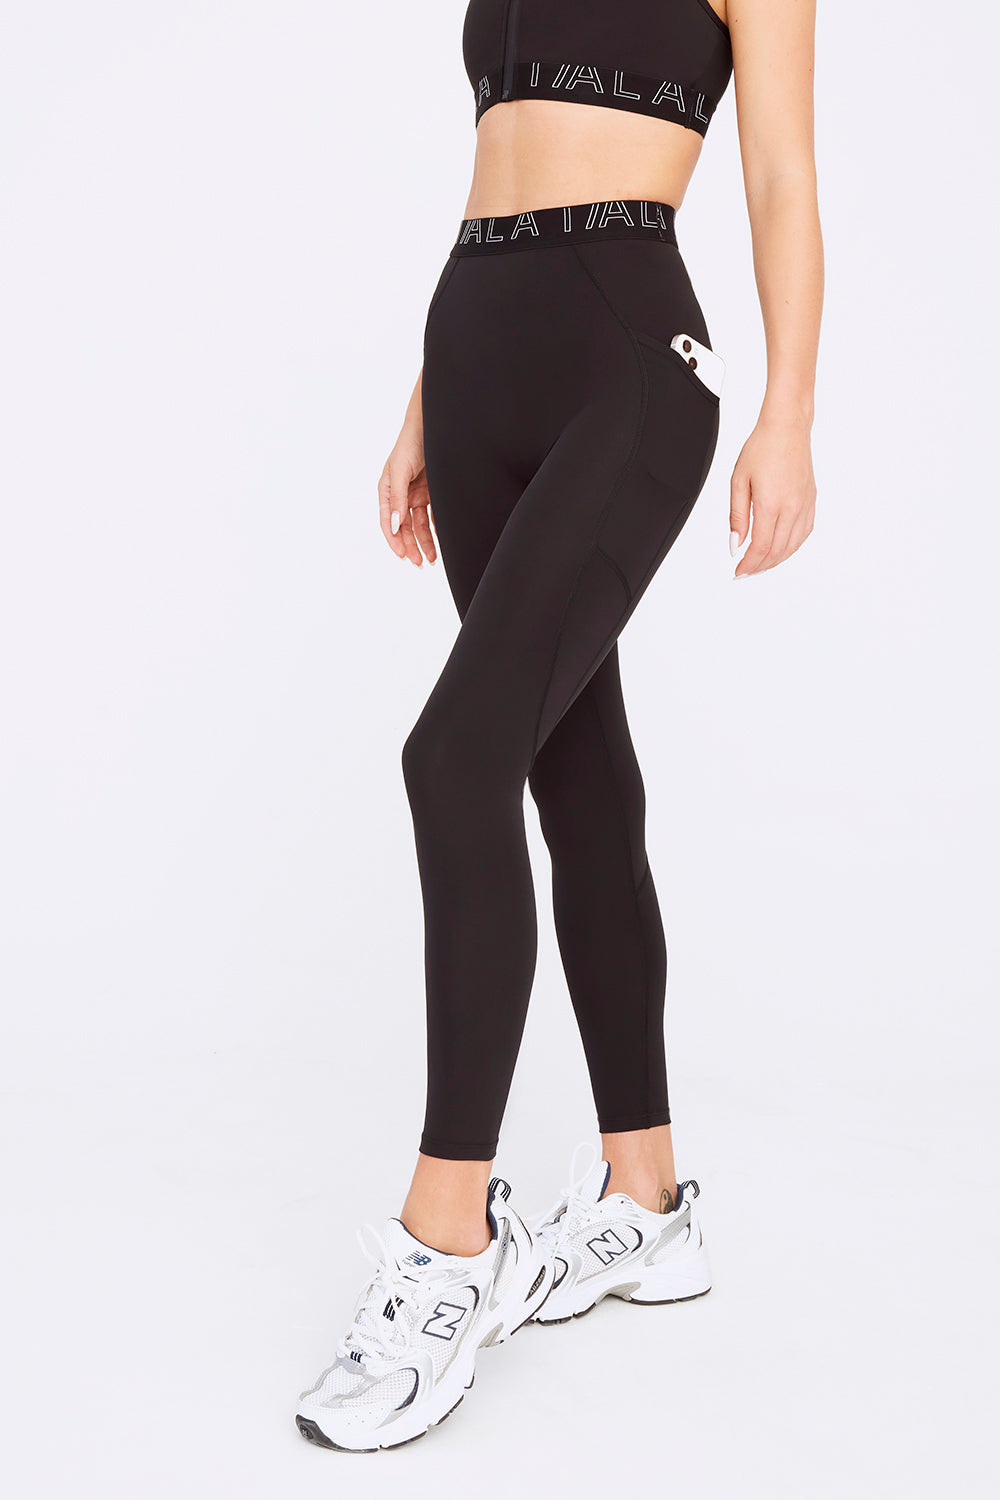 Nike Dry 3/4 Tights Yoga Iron Grey/Black XL : Clothing, Shoes & Jewelry 